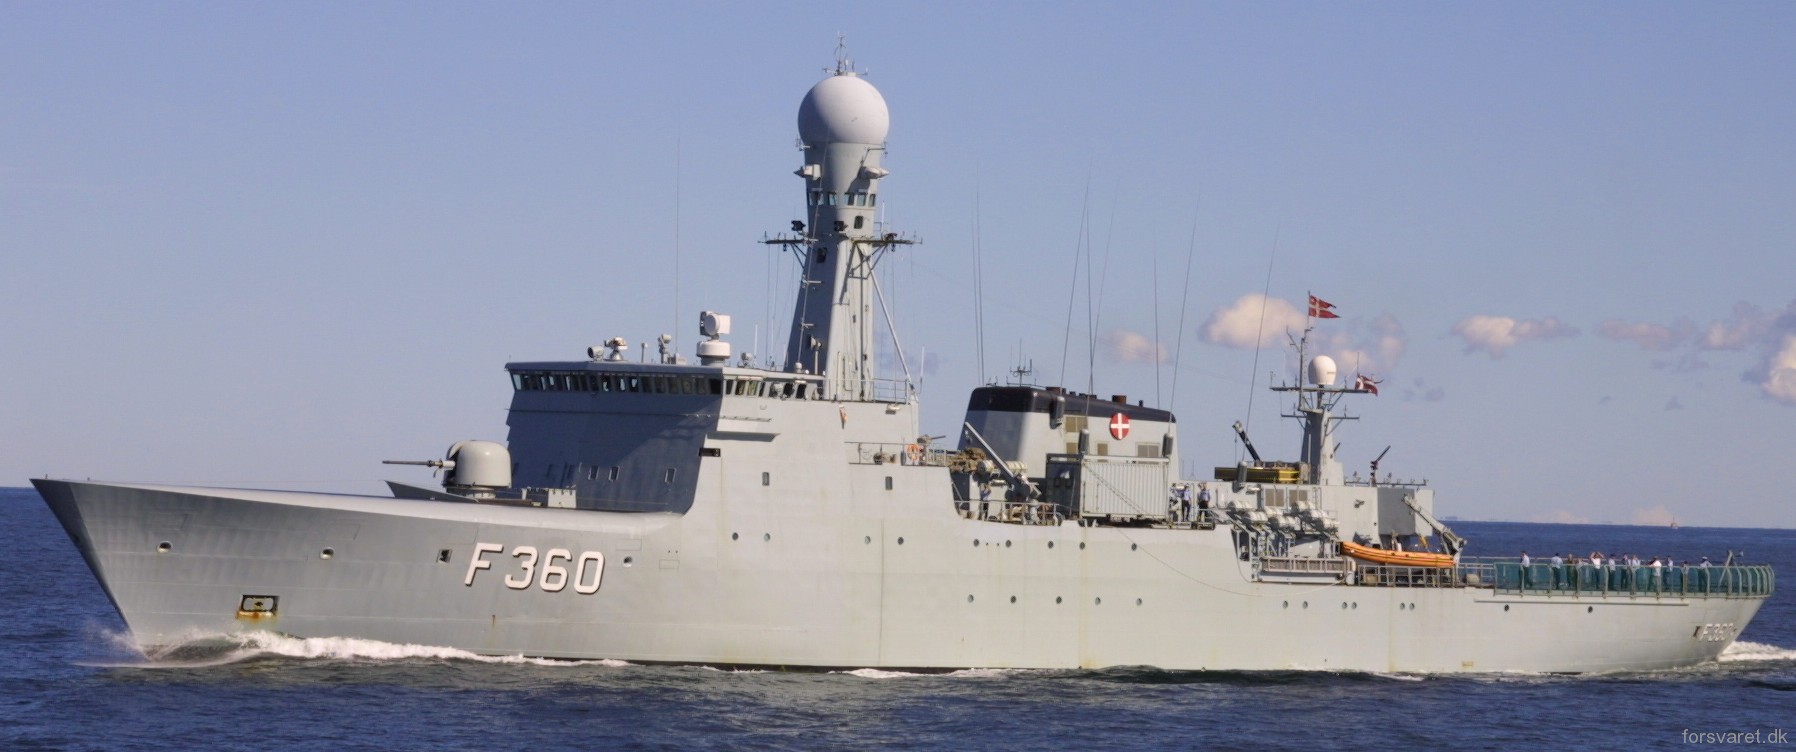 f-360 hdms hvidbjornen thetis class ocean patrol frigate royal danish navy kongelige danske marine kdm inspektionsskibet 11